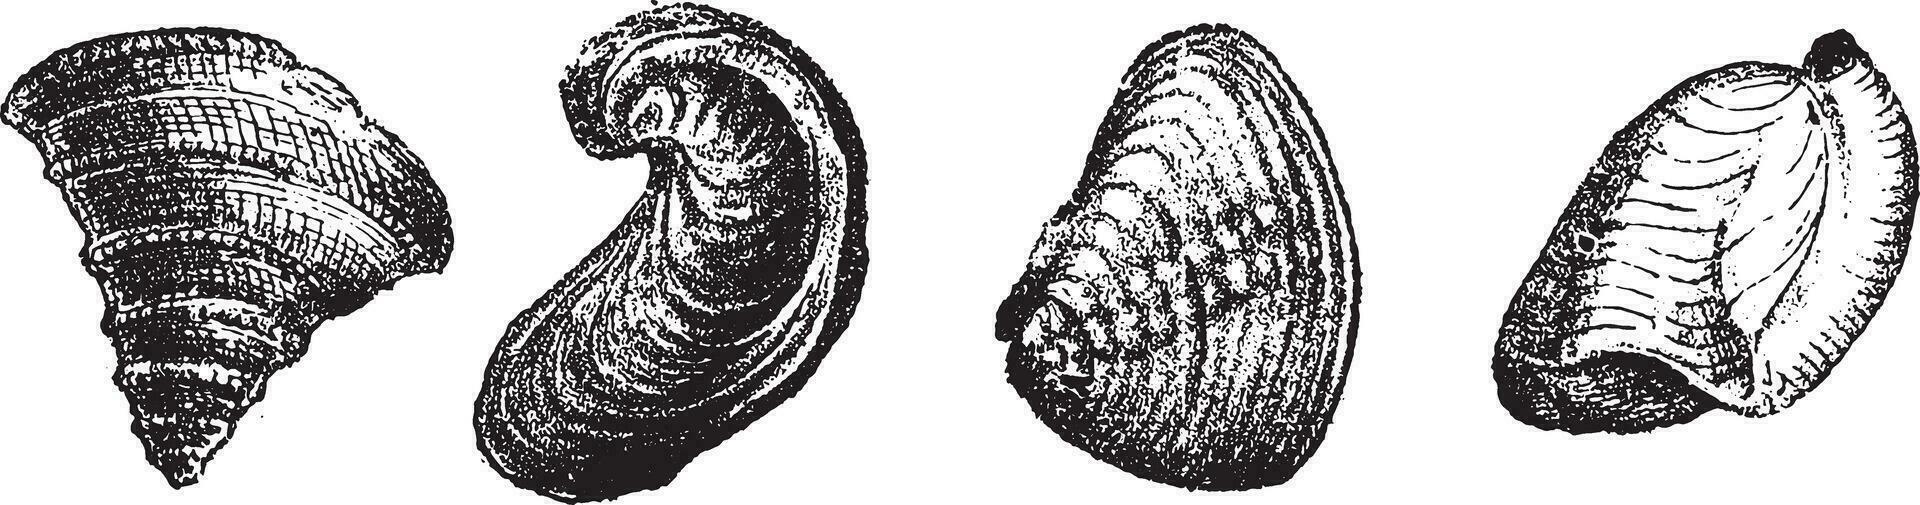 Pleurotomaria Konoidea, Ostrea Virgula, Trigonie Gibbosa, Terebrula subsella, Jahrgang Gravur. vektor